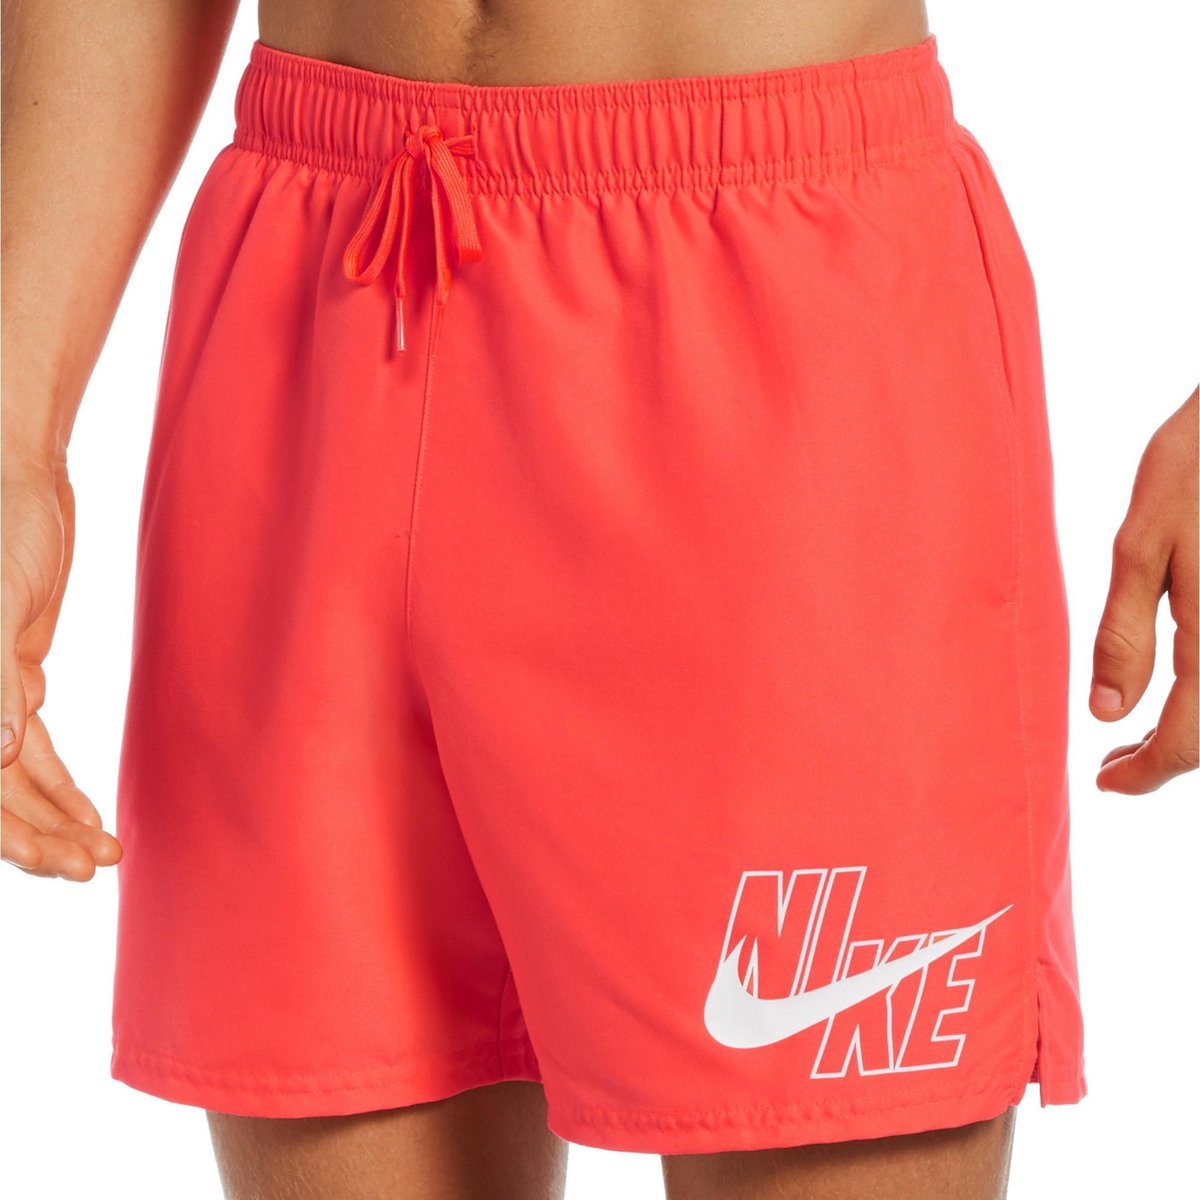 Nike Zwembroek - Mannen - Oranje/Rood/Wit - Maat M - Nike